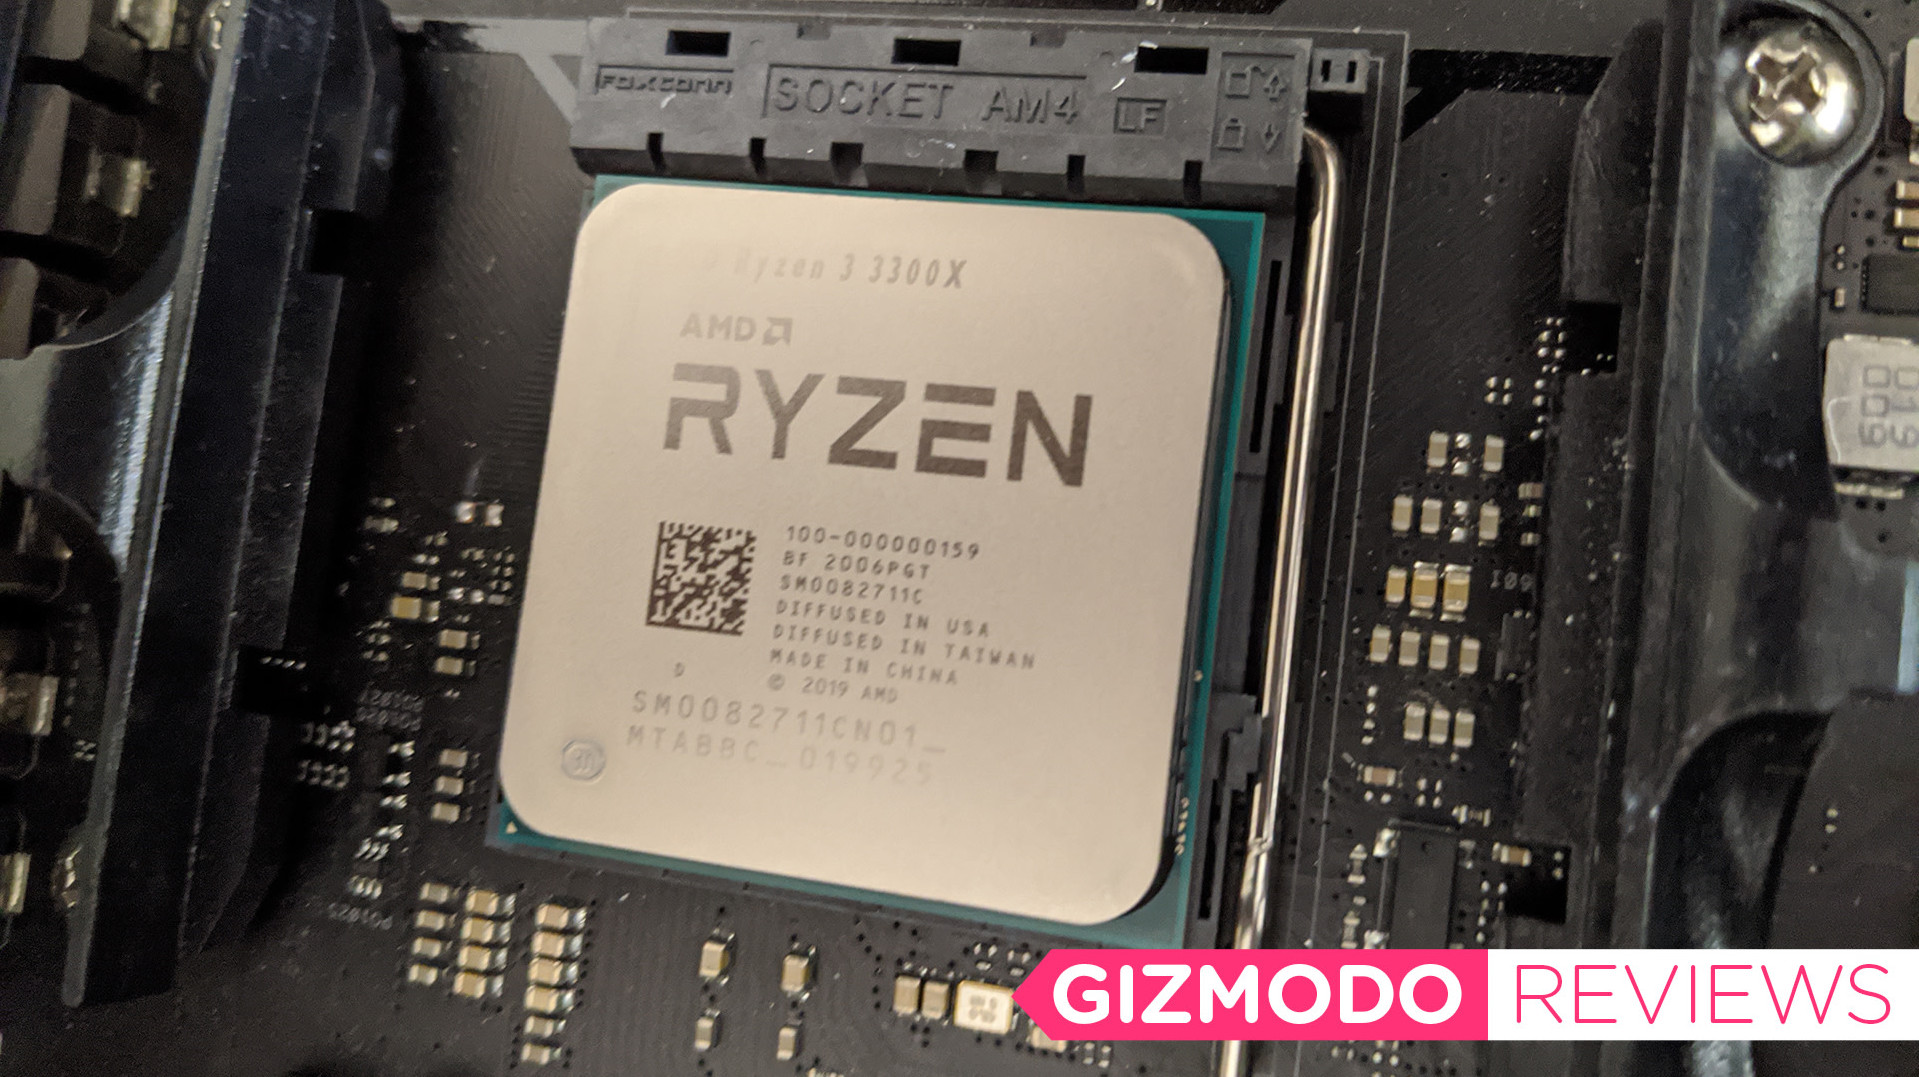 CPU AMD Ryzen 3